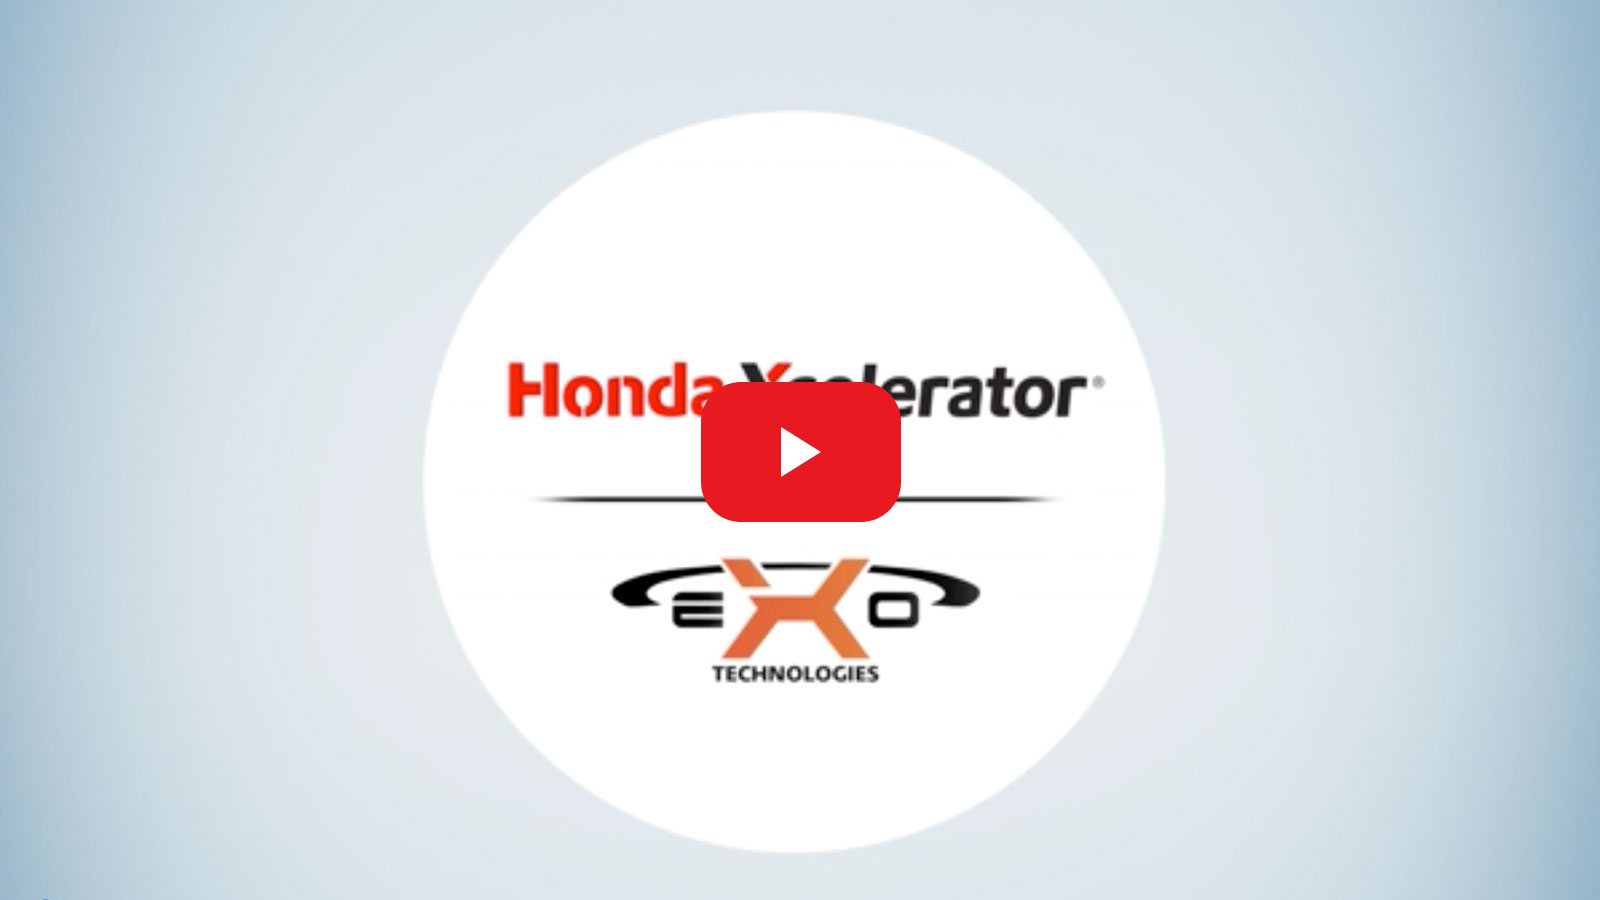 Exo Technologies Ces 18 Honda